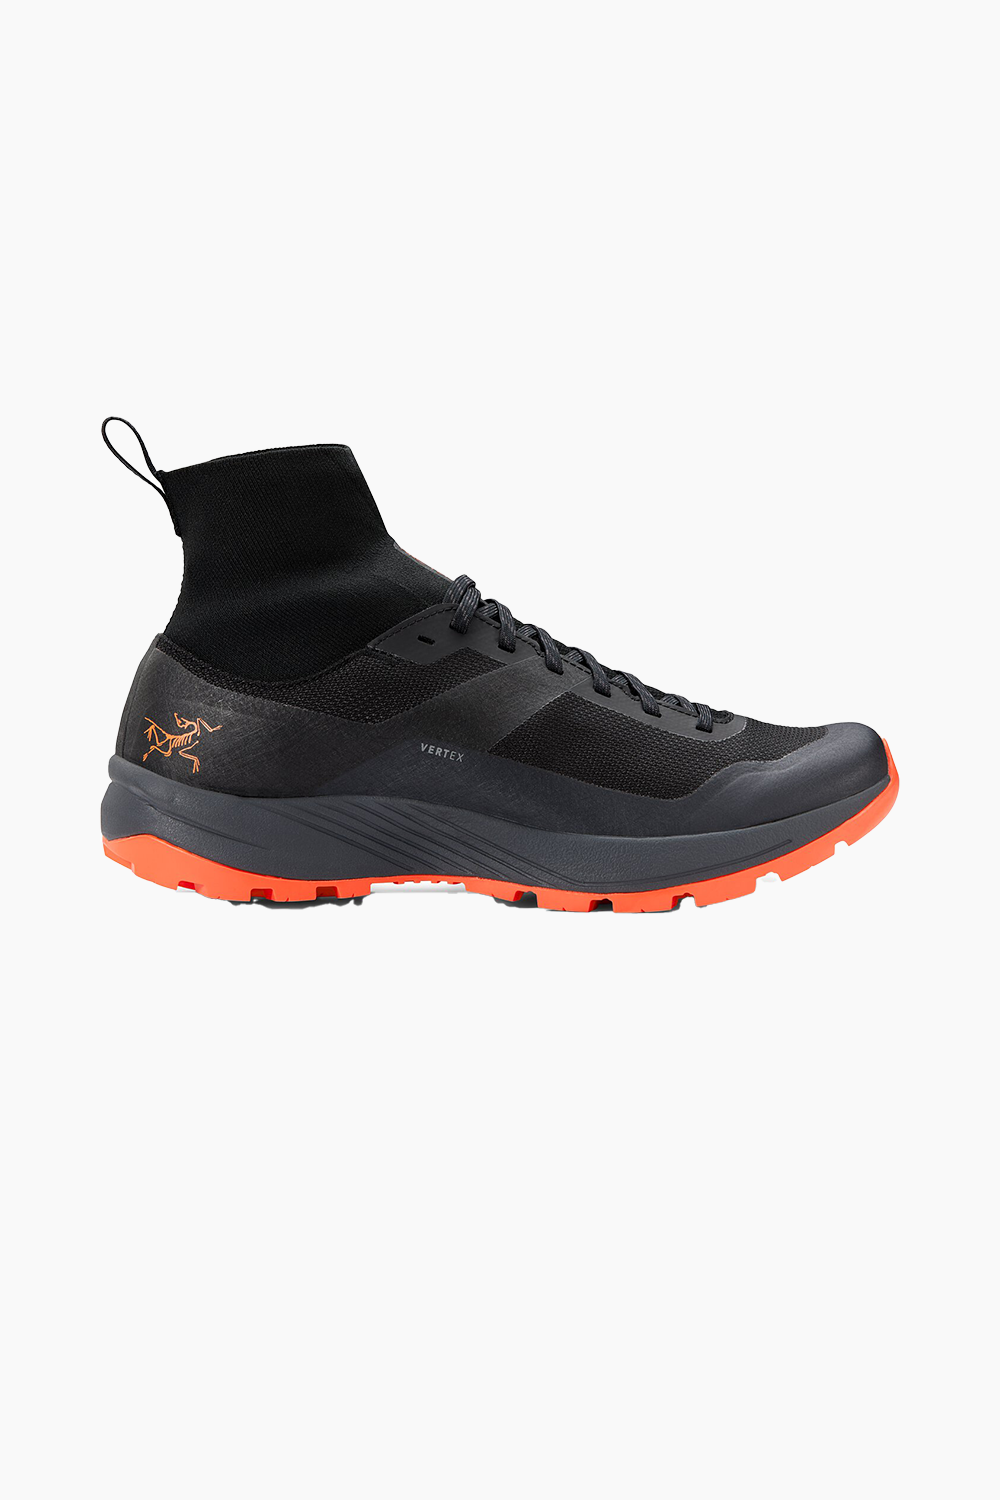 Arc'teryx Unisex Vertex Shoe in Black/Bright Phenom